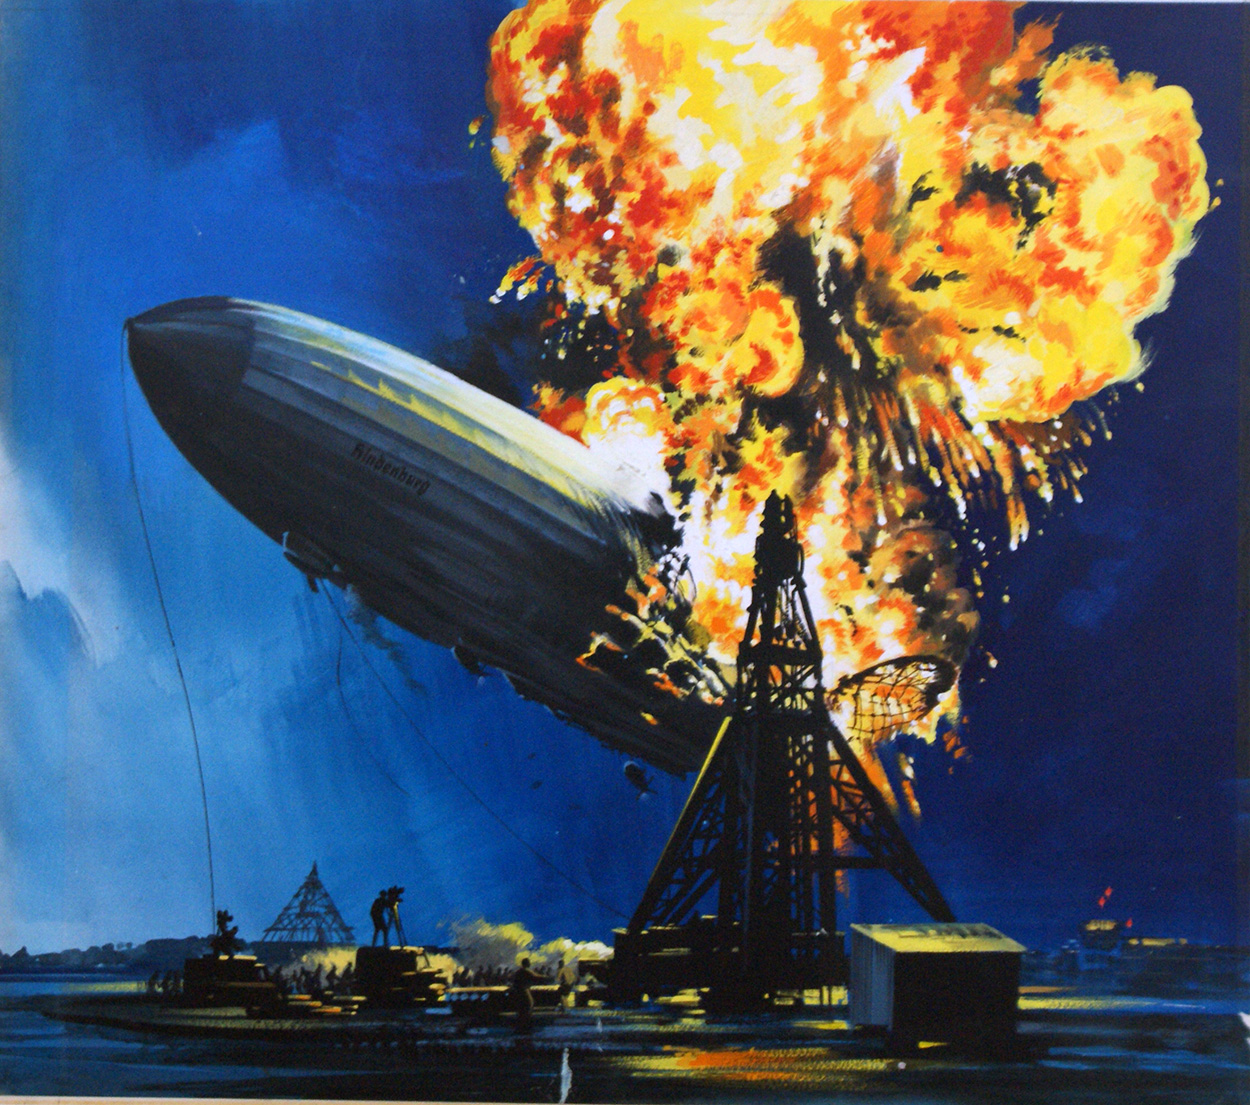 The Hindenburg Airship (Original) art by Gerry Wood Art at The Illustration Art Gallery